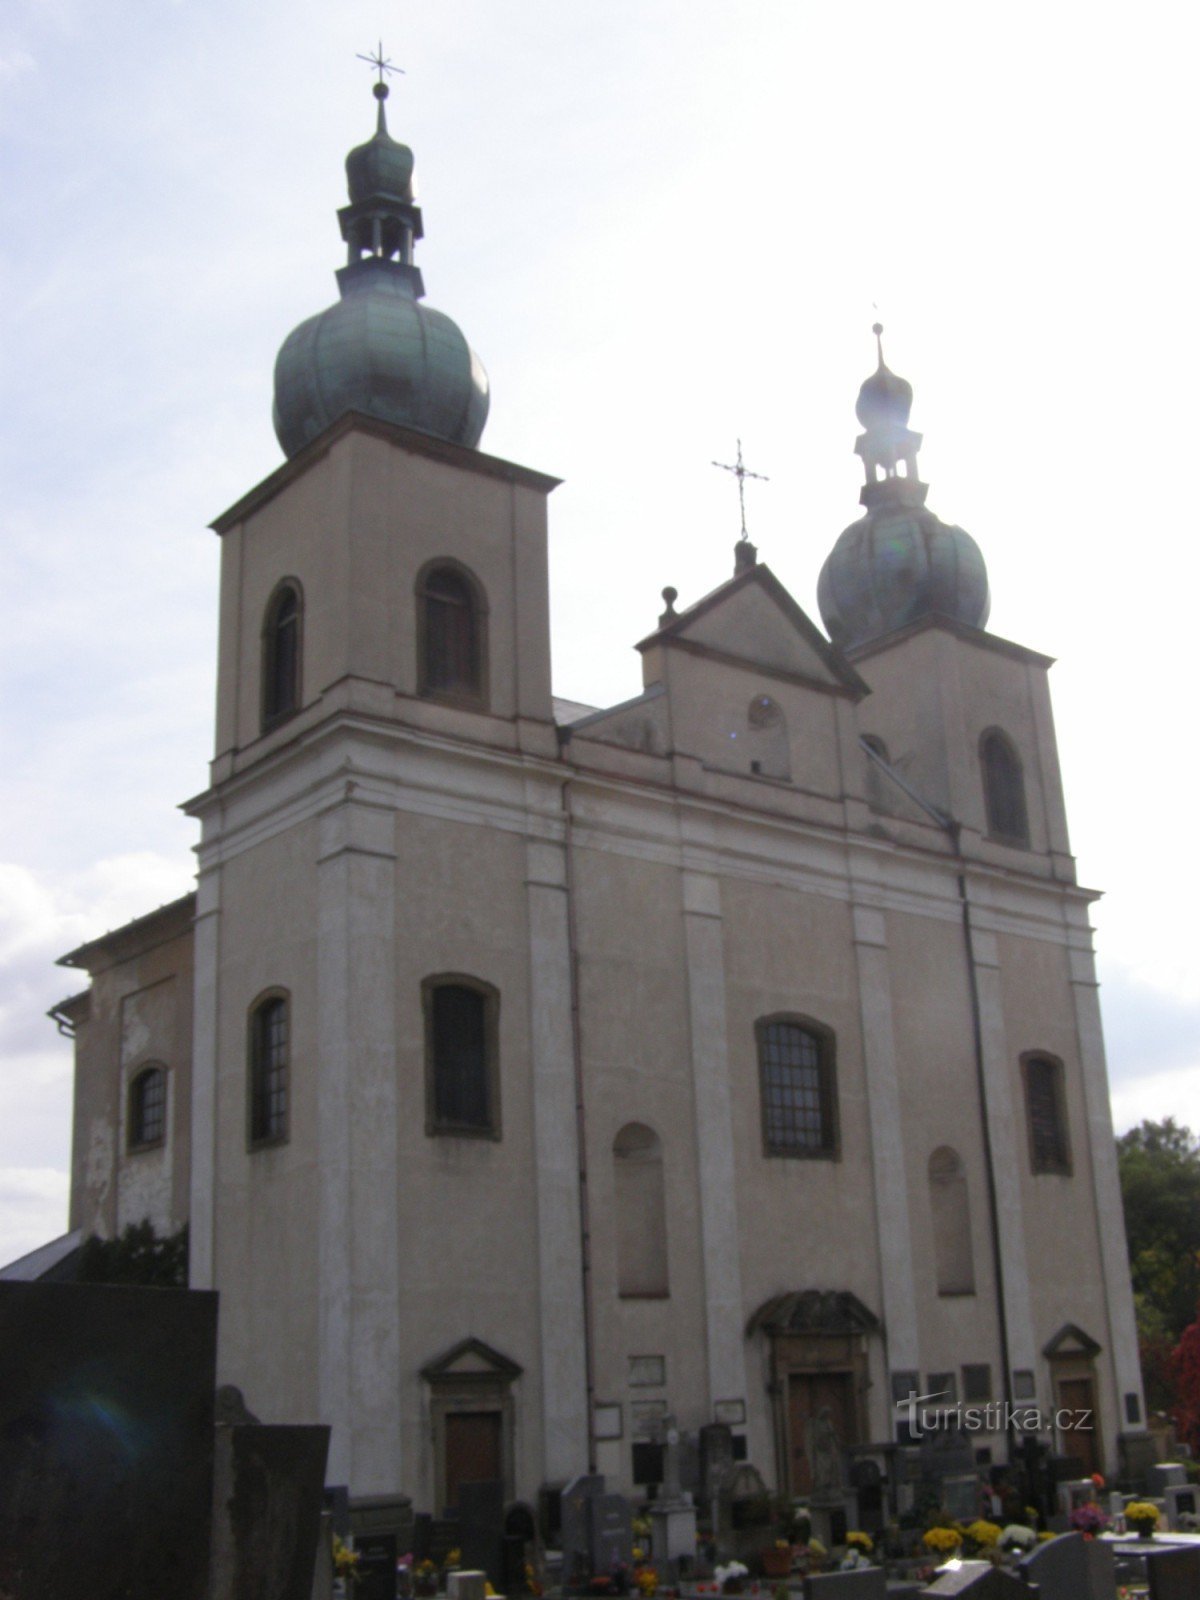 Kostelec nad Orlicí - Kirche St. Anne